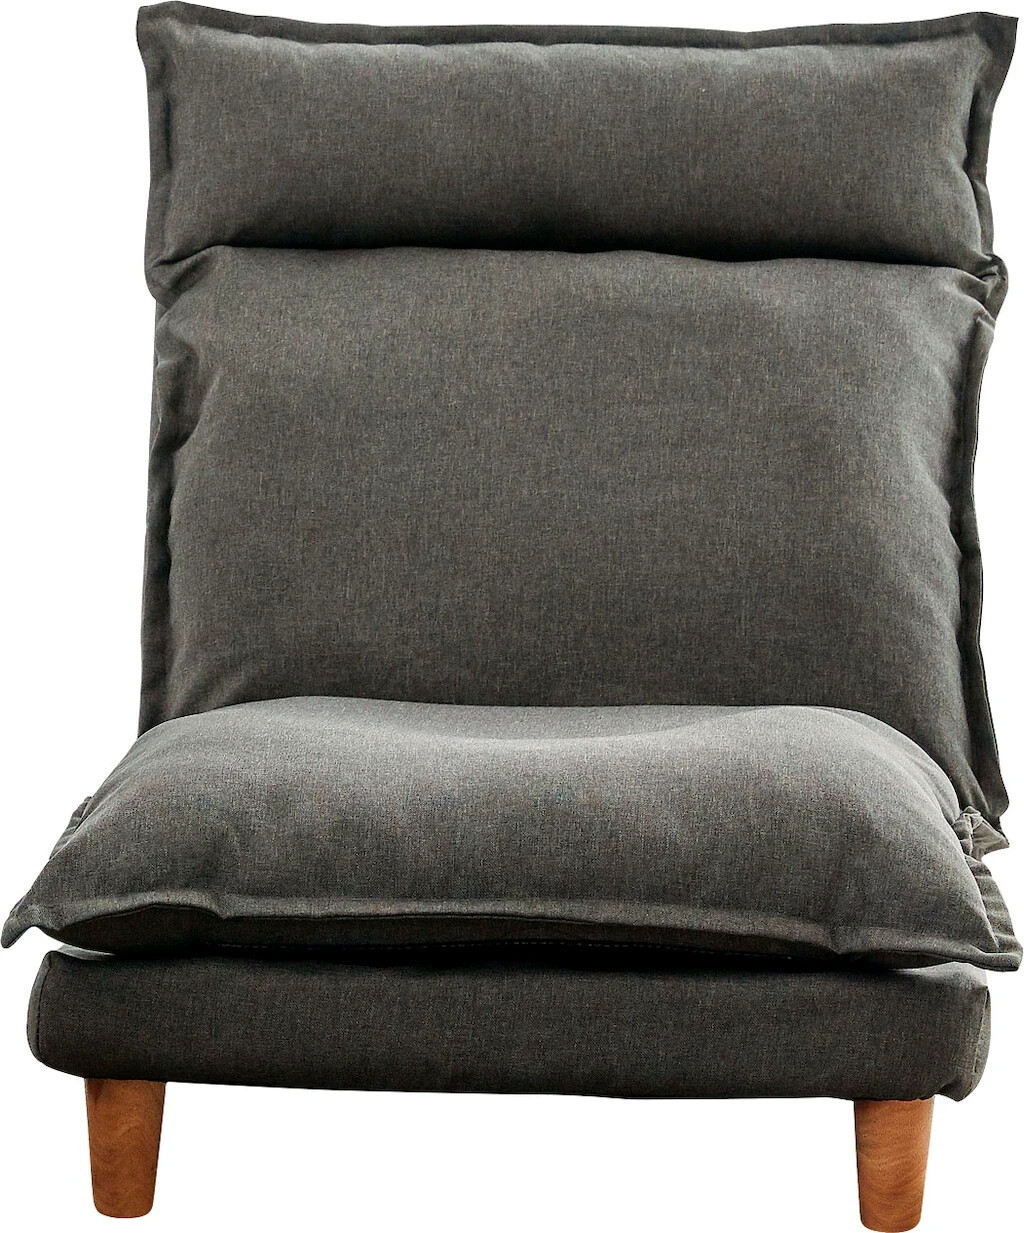 SalesFever Sessel mit Hocker grau/natur (394830) ab 309,00 € |  Preisvergleich bei